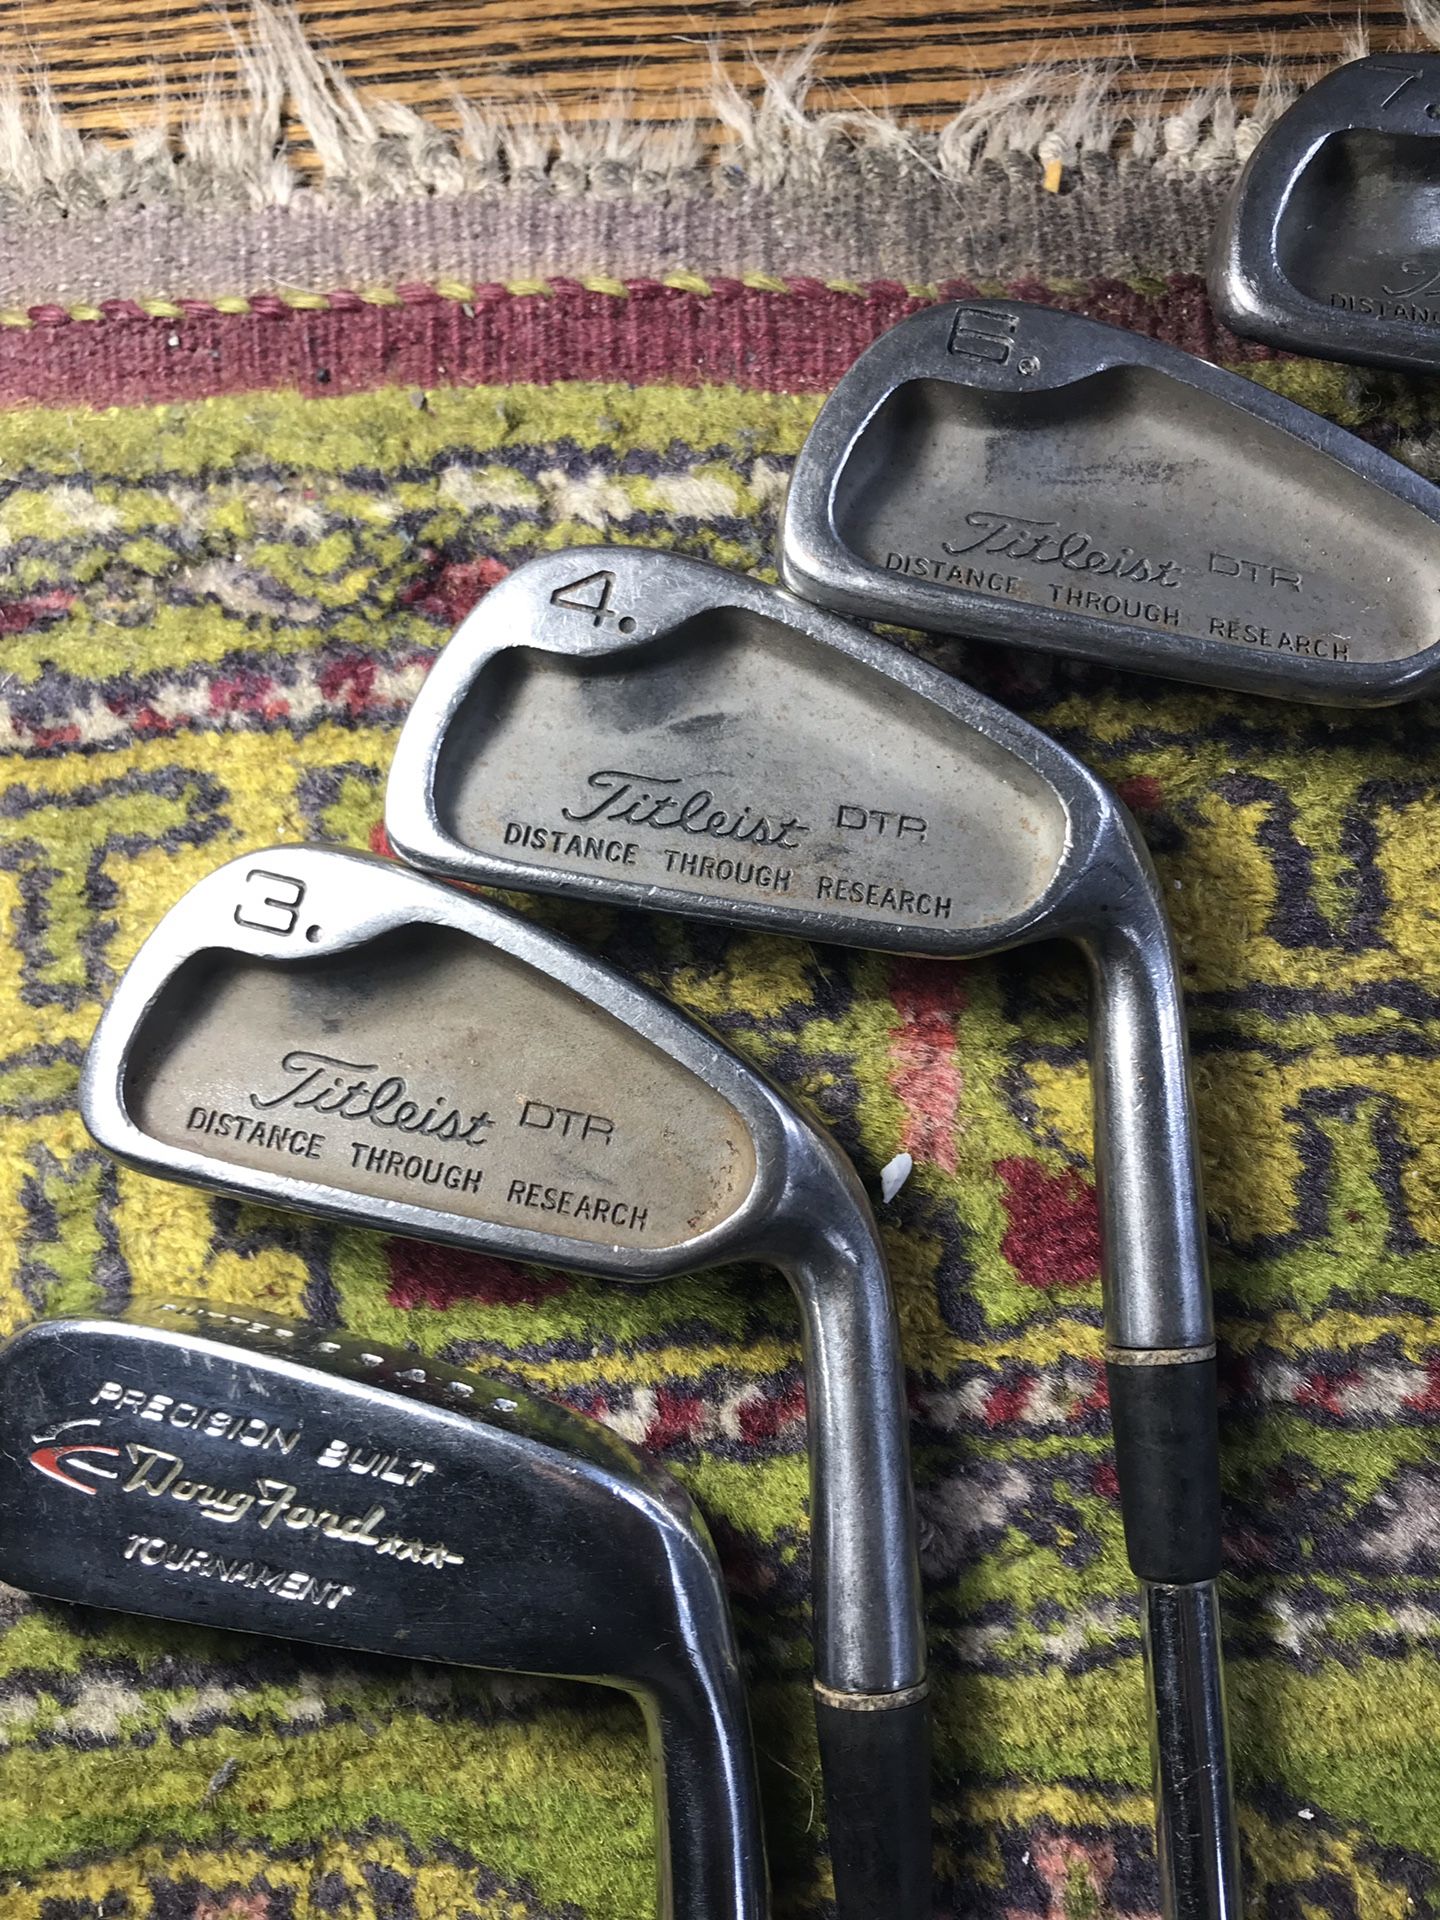 Titleist DTR Iron Golf Clubs #3,4,6,7,8 and included is Ferguson built Doug Ford little club.